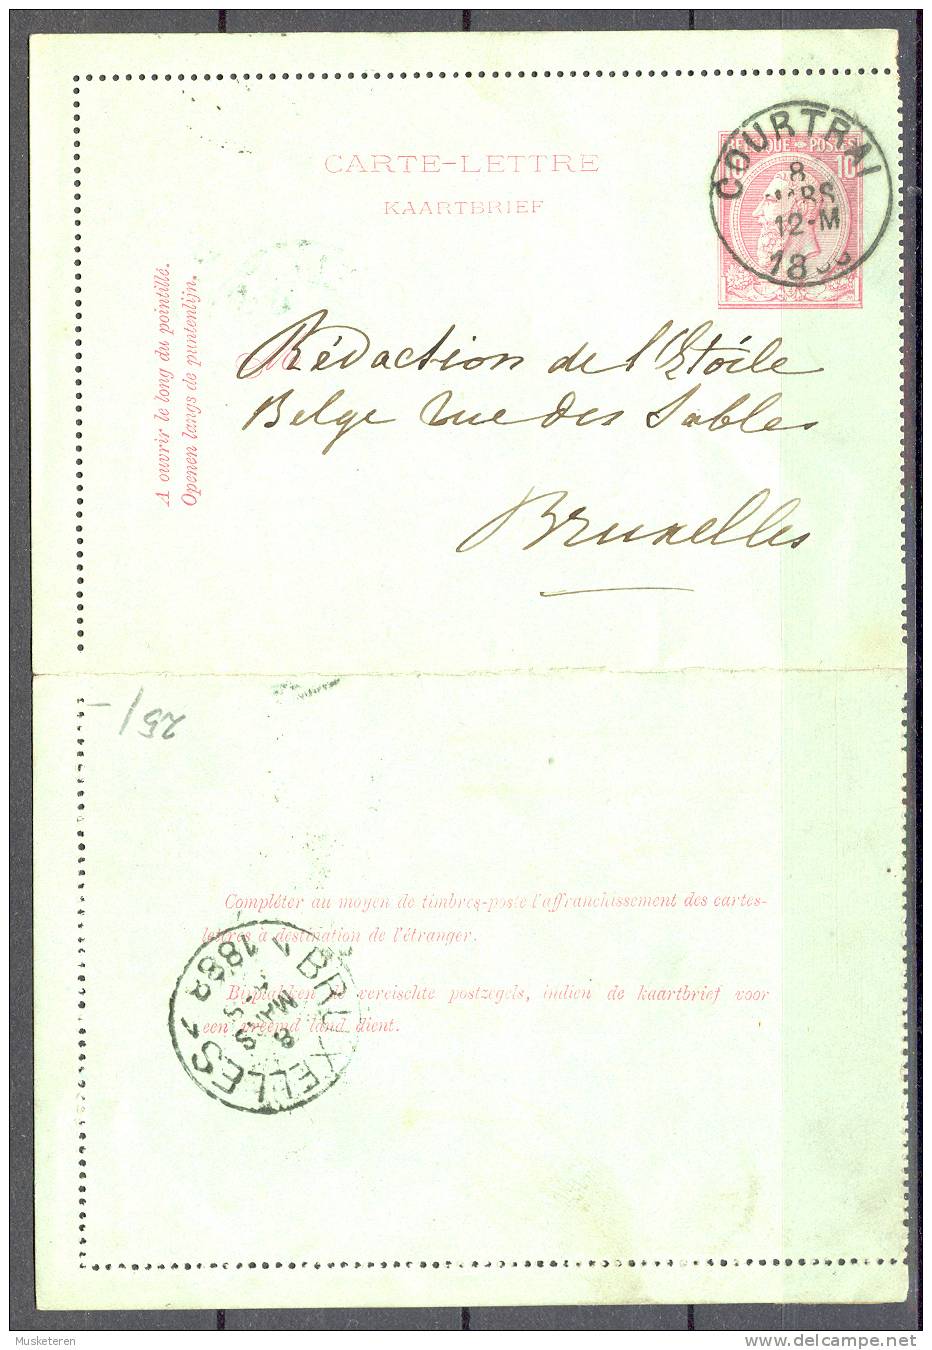 Belgium Postal Stationery Ganzsache Carte-Lettre Letter Card Deluxe COUTRAI Cancel 1888 To Bruxelles - Carte-Lettere